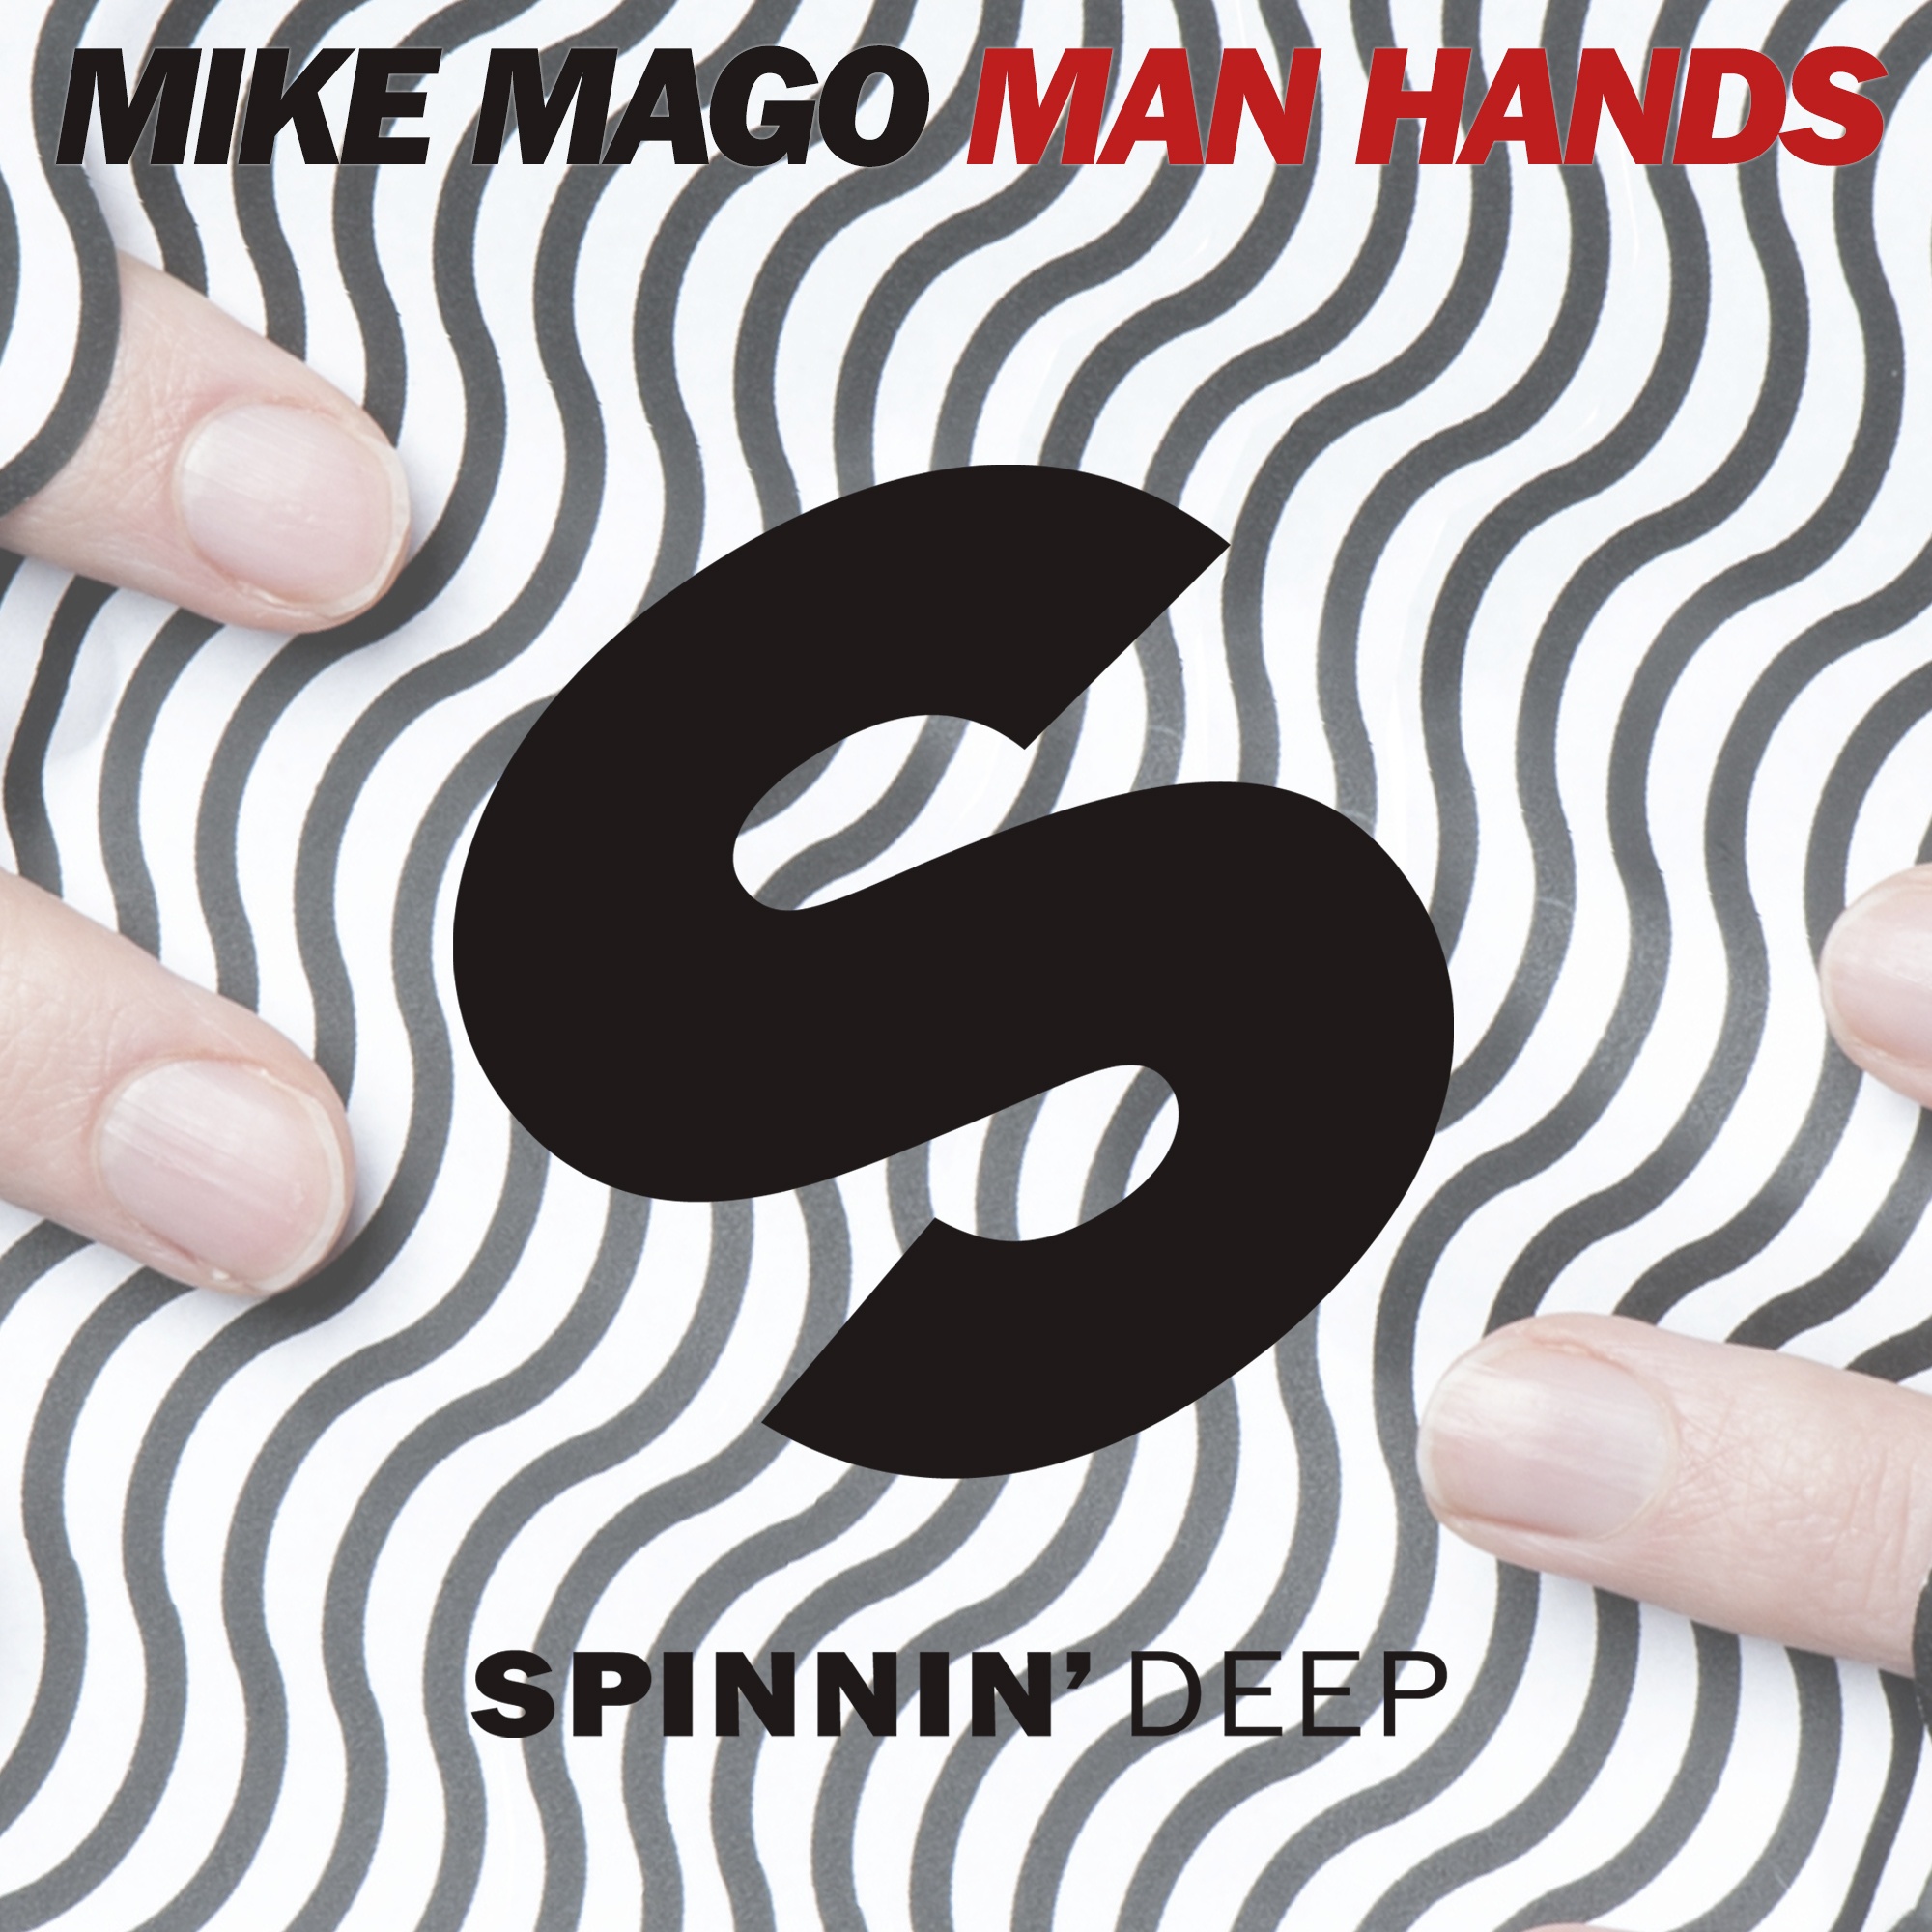 Man Hands (Original Mix)